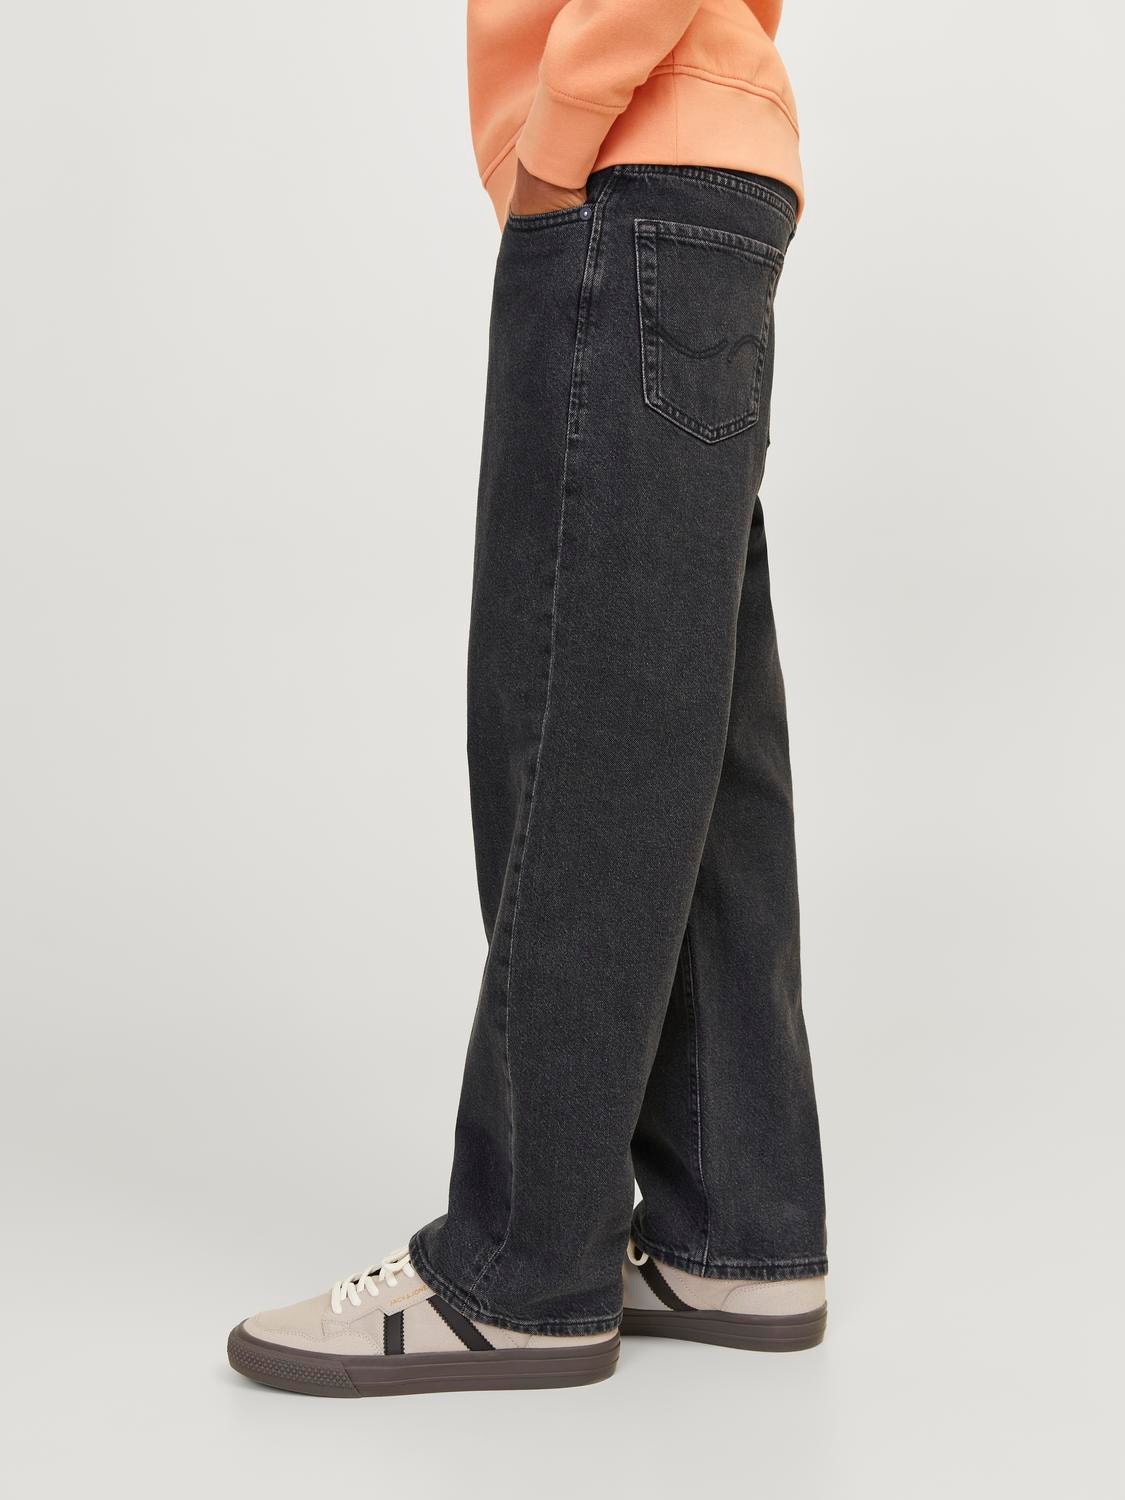 Jack & Jones JJIALEX JJIORIGINAL SQ 955 Baggy fit jeans For boys -Black Denim - 12262150